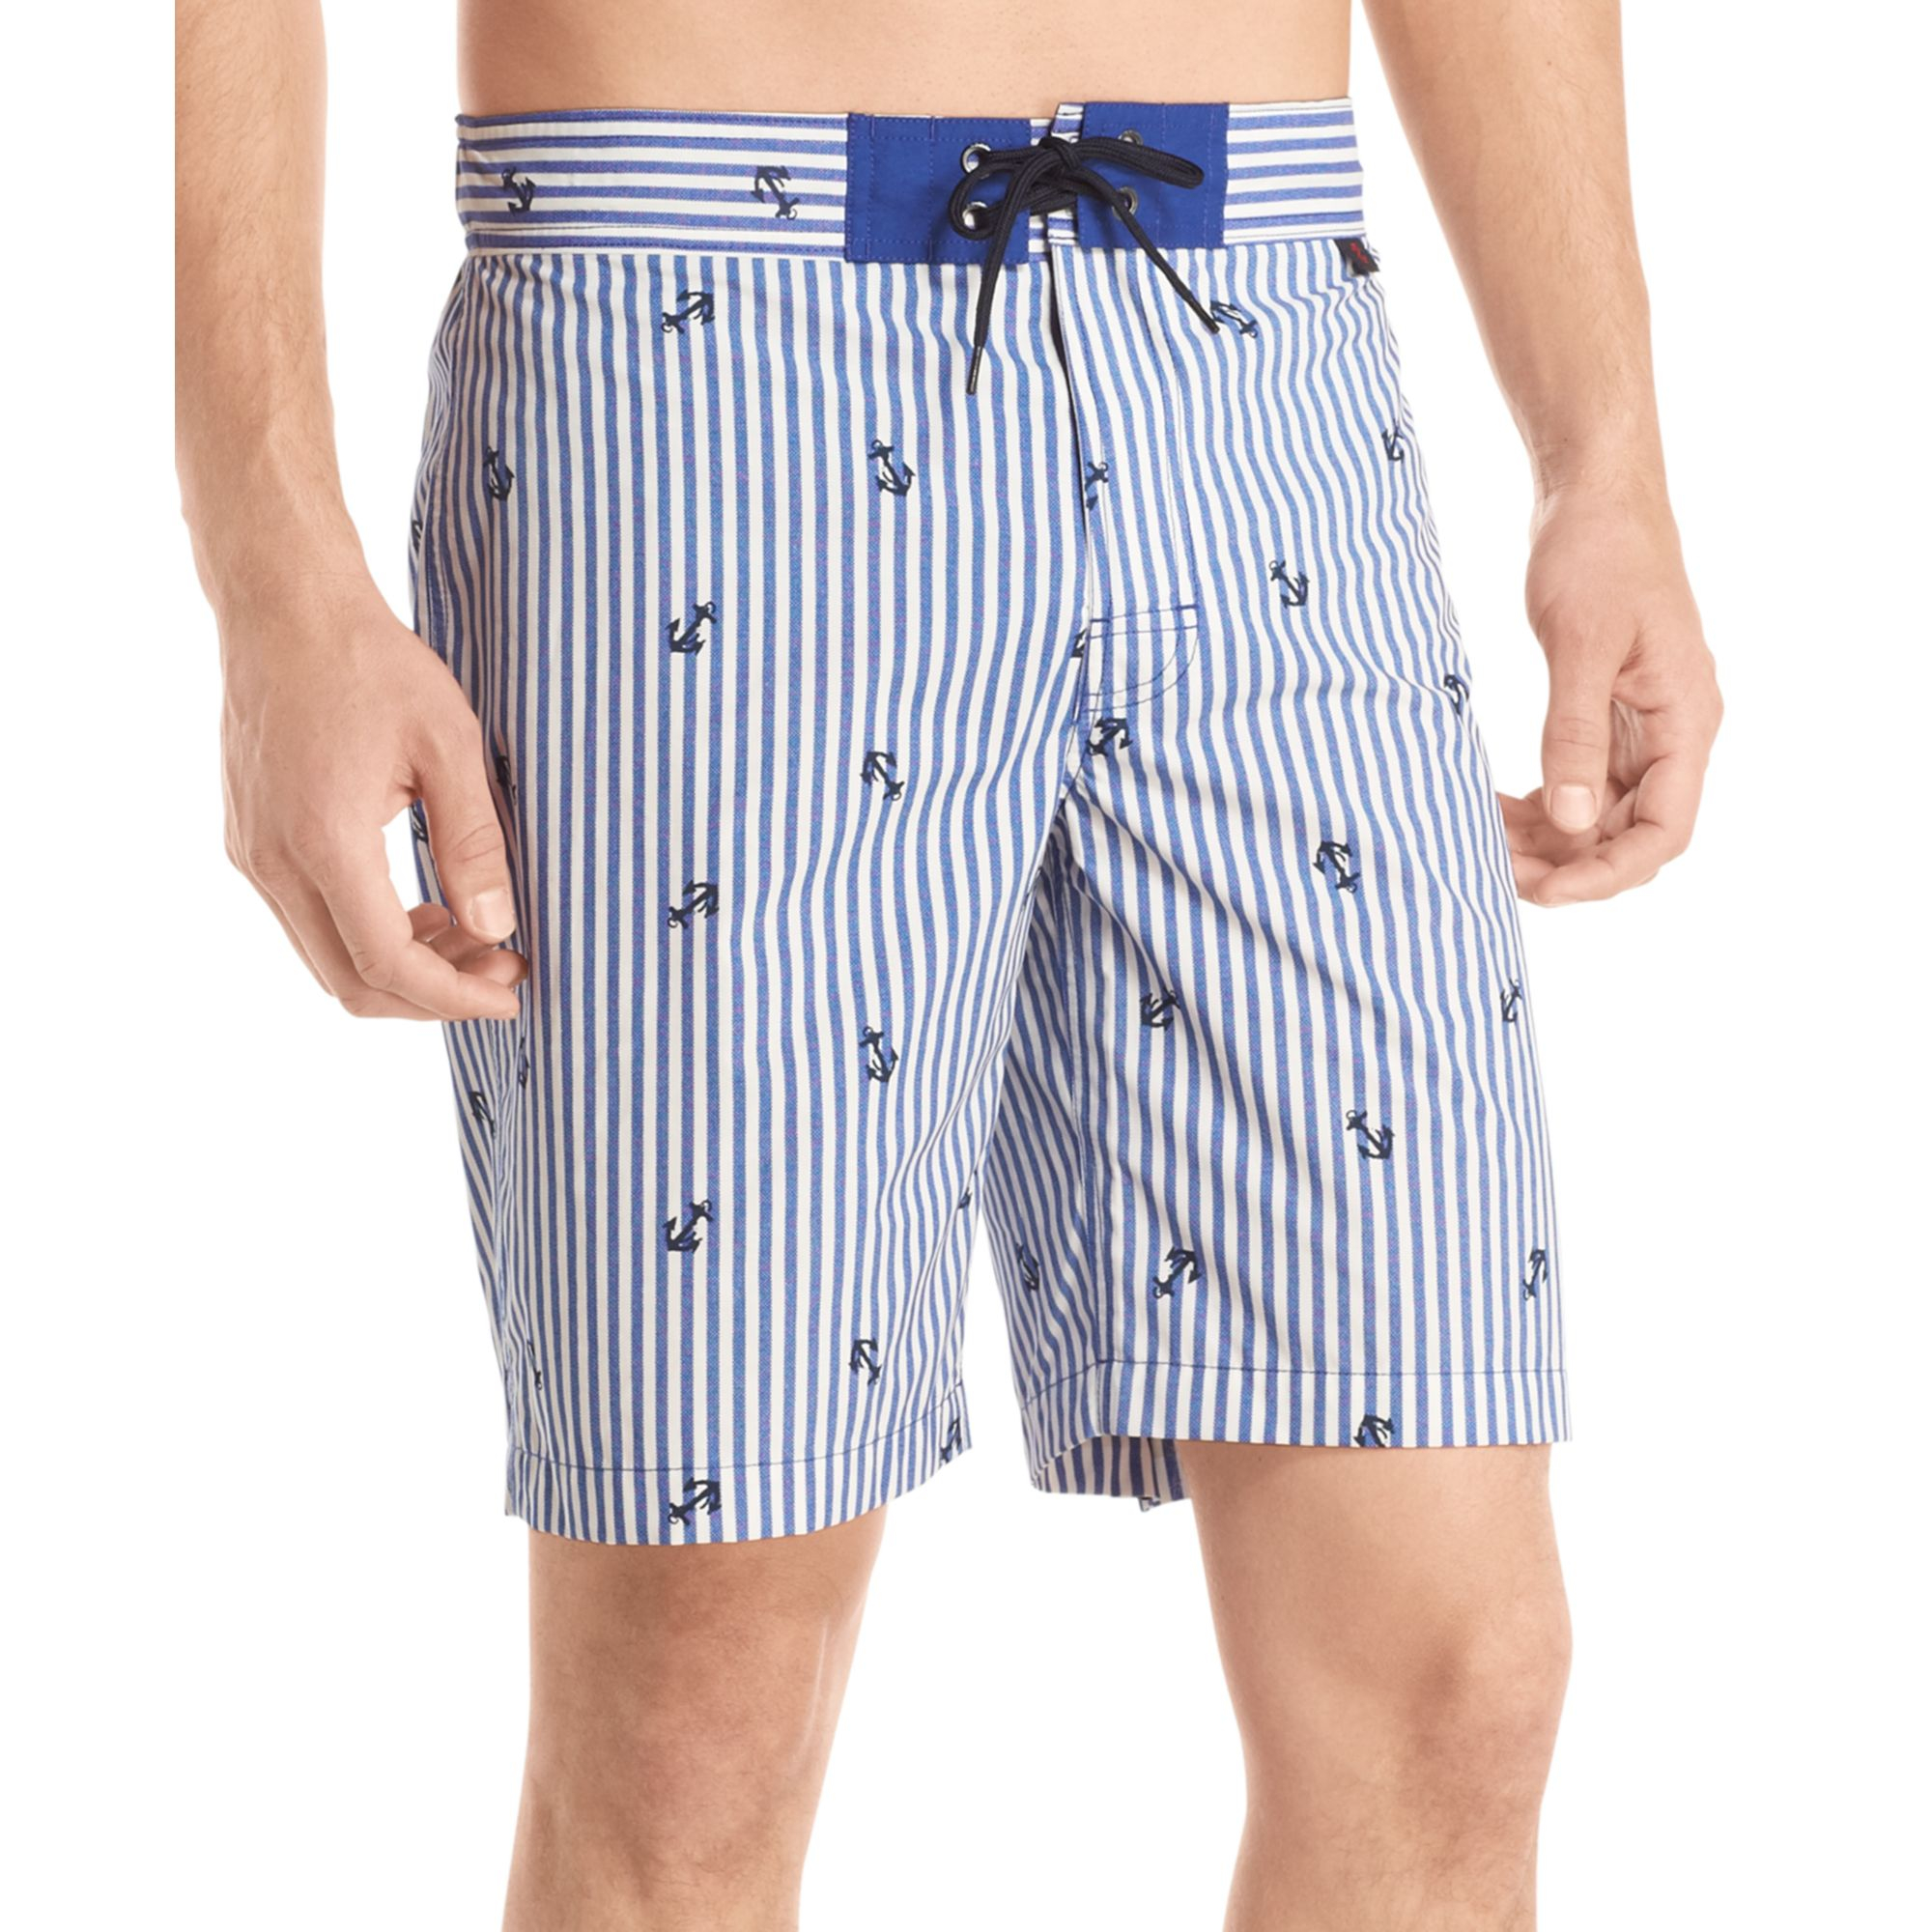 Lyst - Izod Striped Anchor Board Shorts in Blue for Men